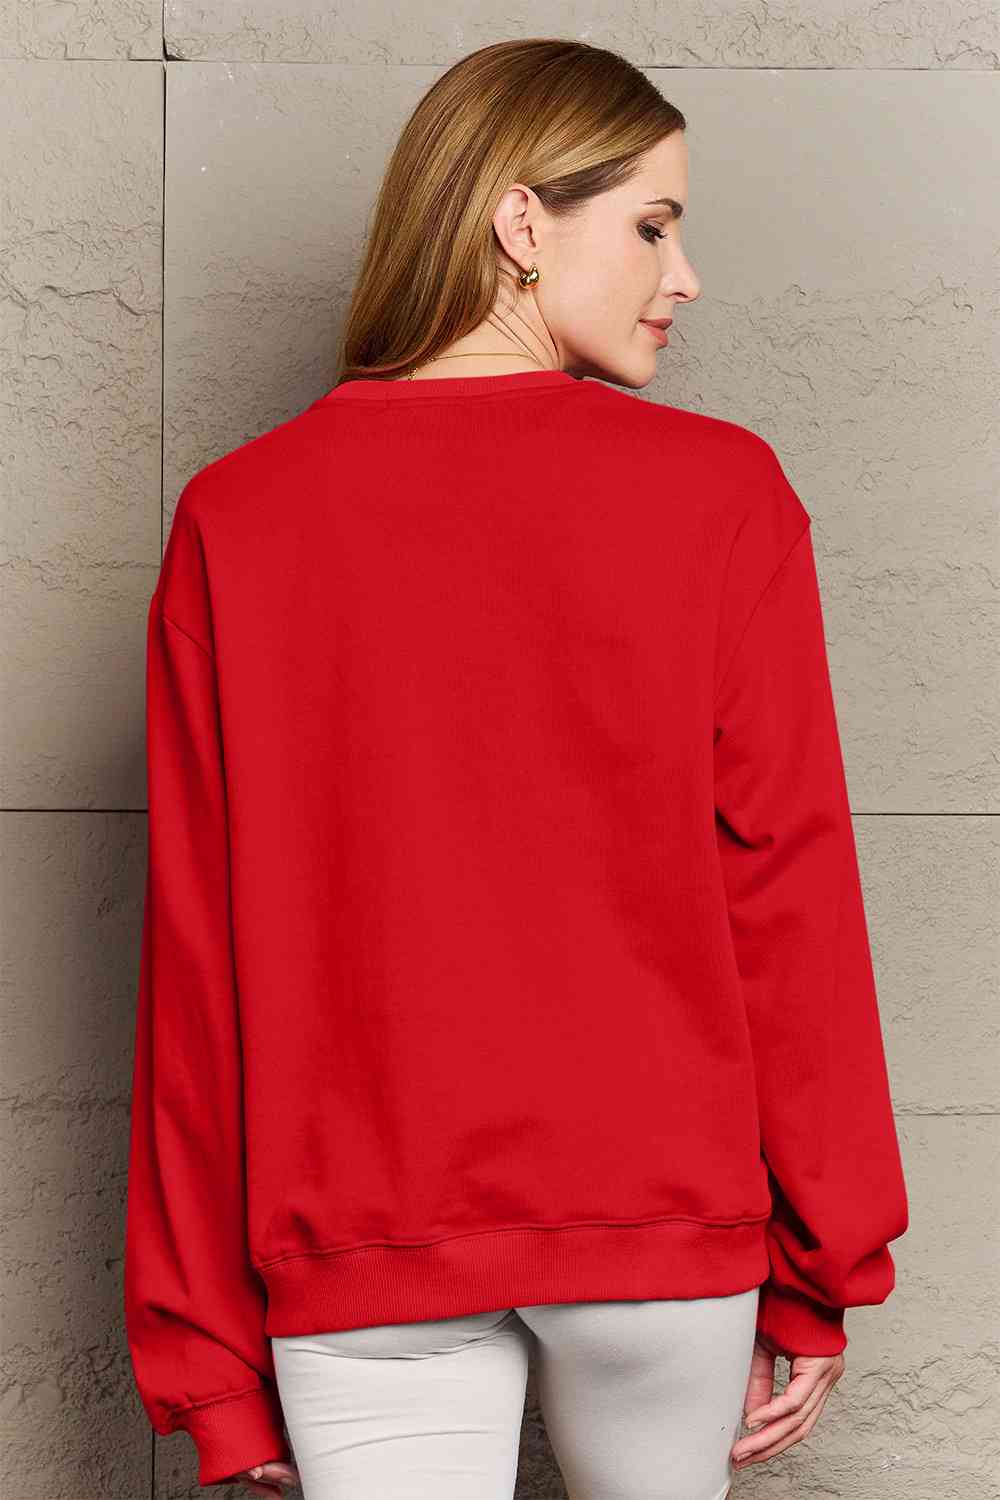 Firebrick Simply Love Full Size NORTH POLE UNIVERSITY Graphic Sweatshirt